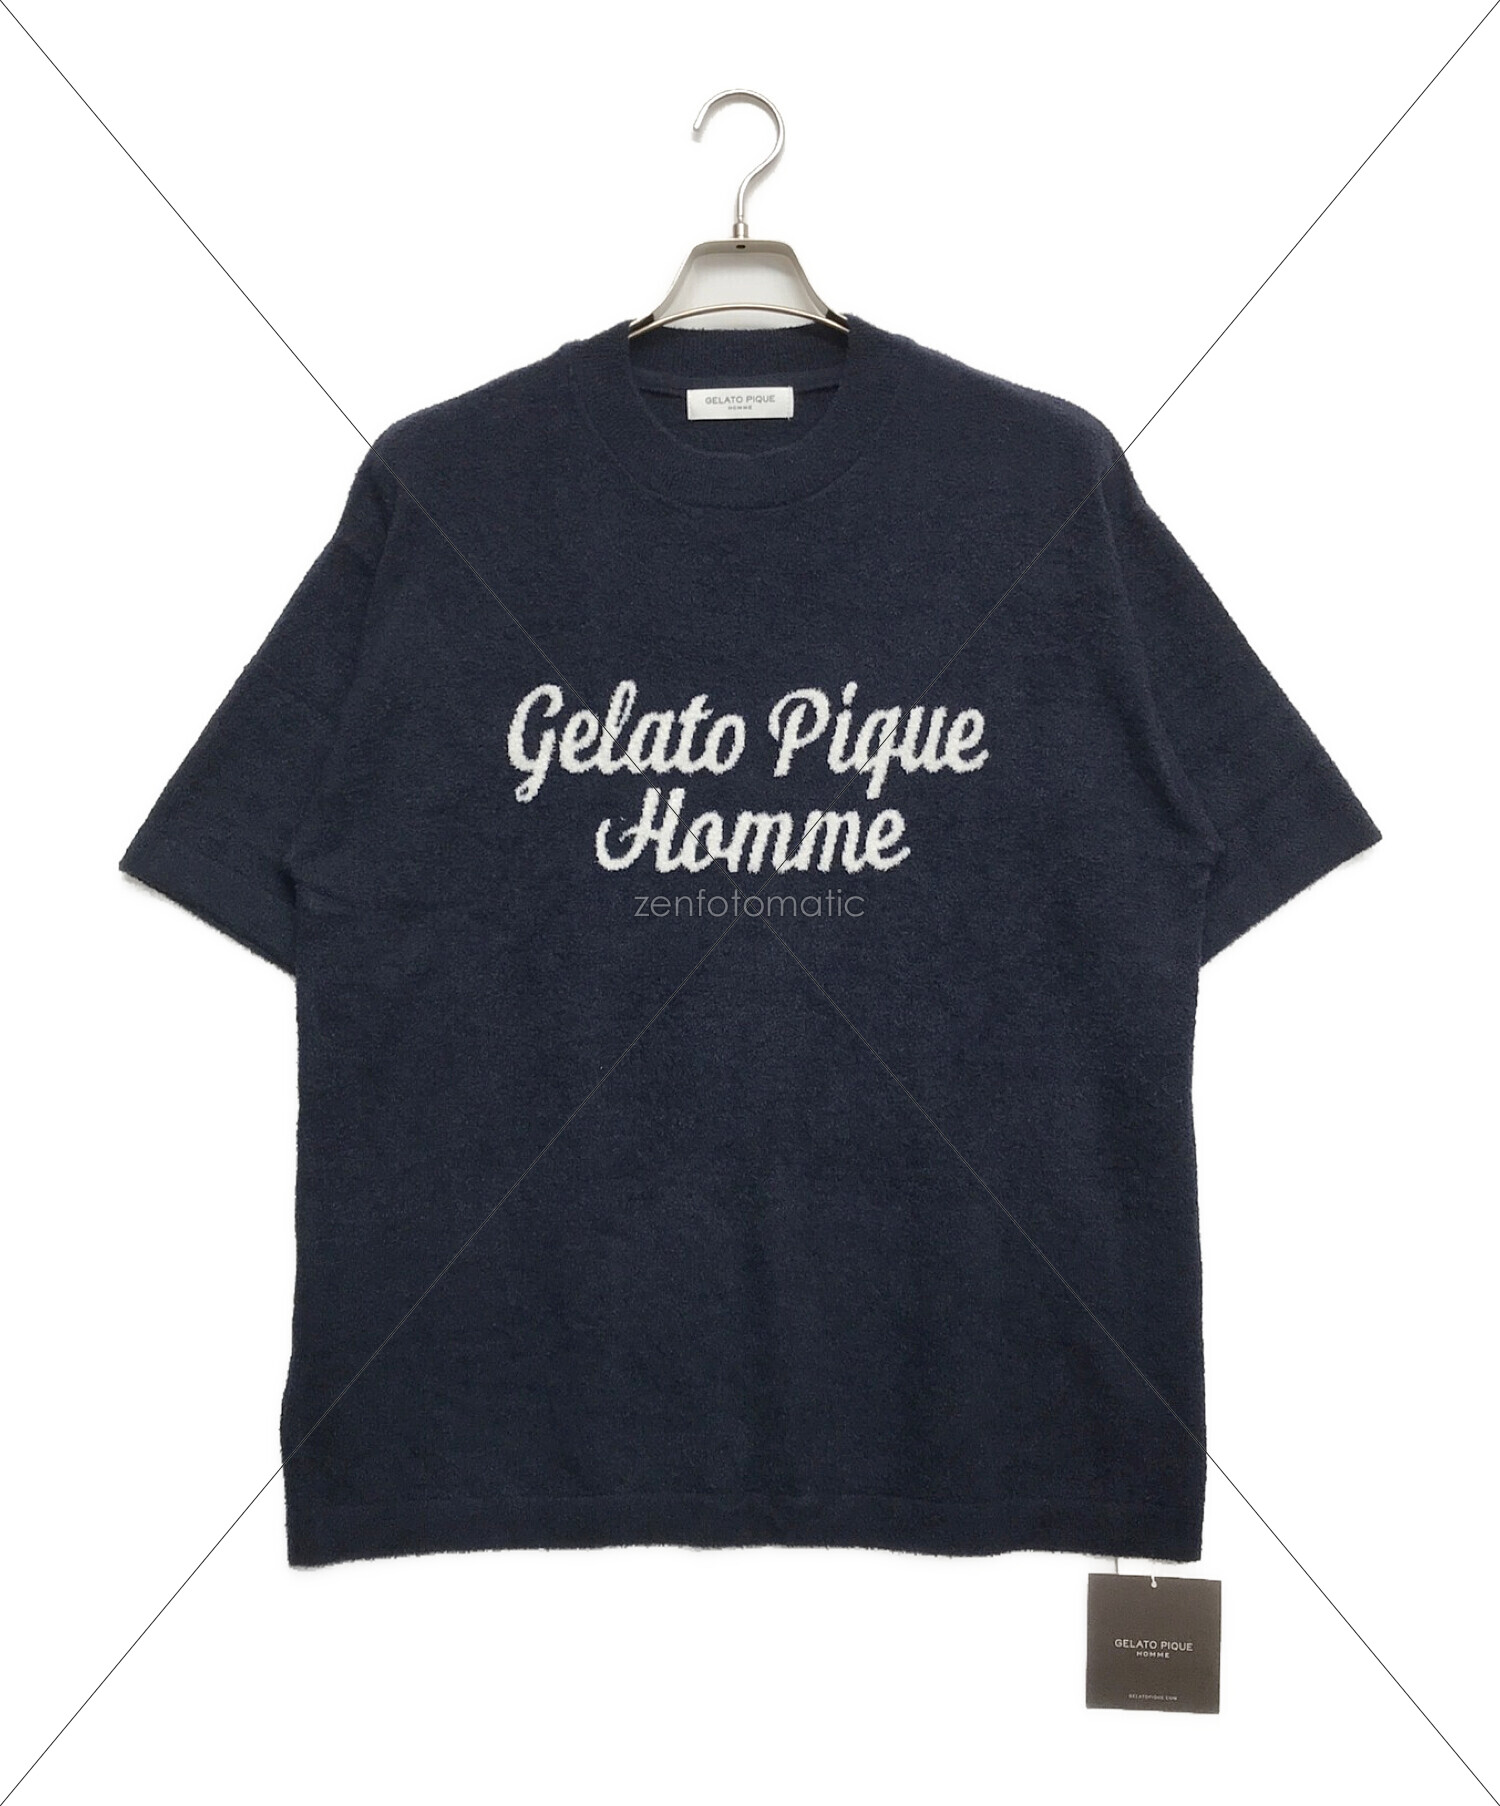 gelato pique homme (ジェラートピケ オム) スムーズィーセットアップ ネイビー サイズ:M 未使用品